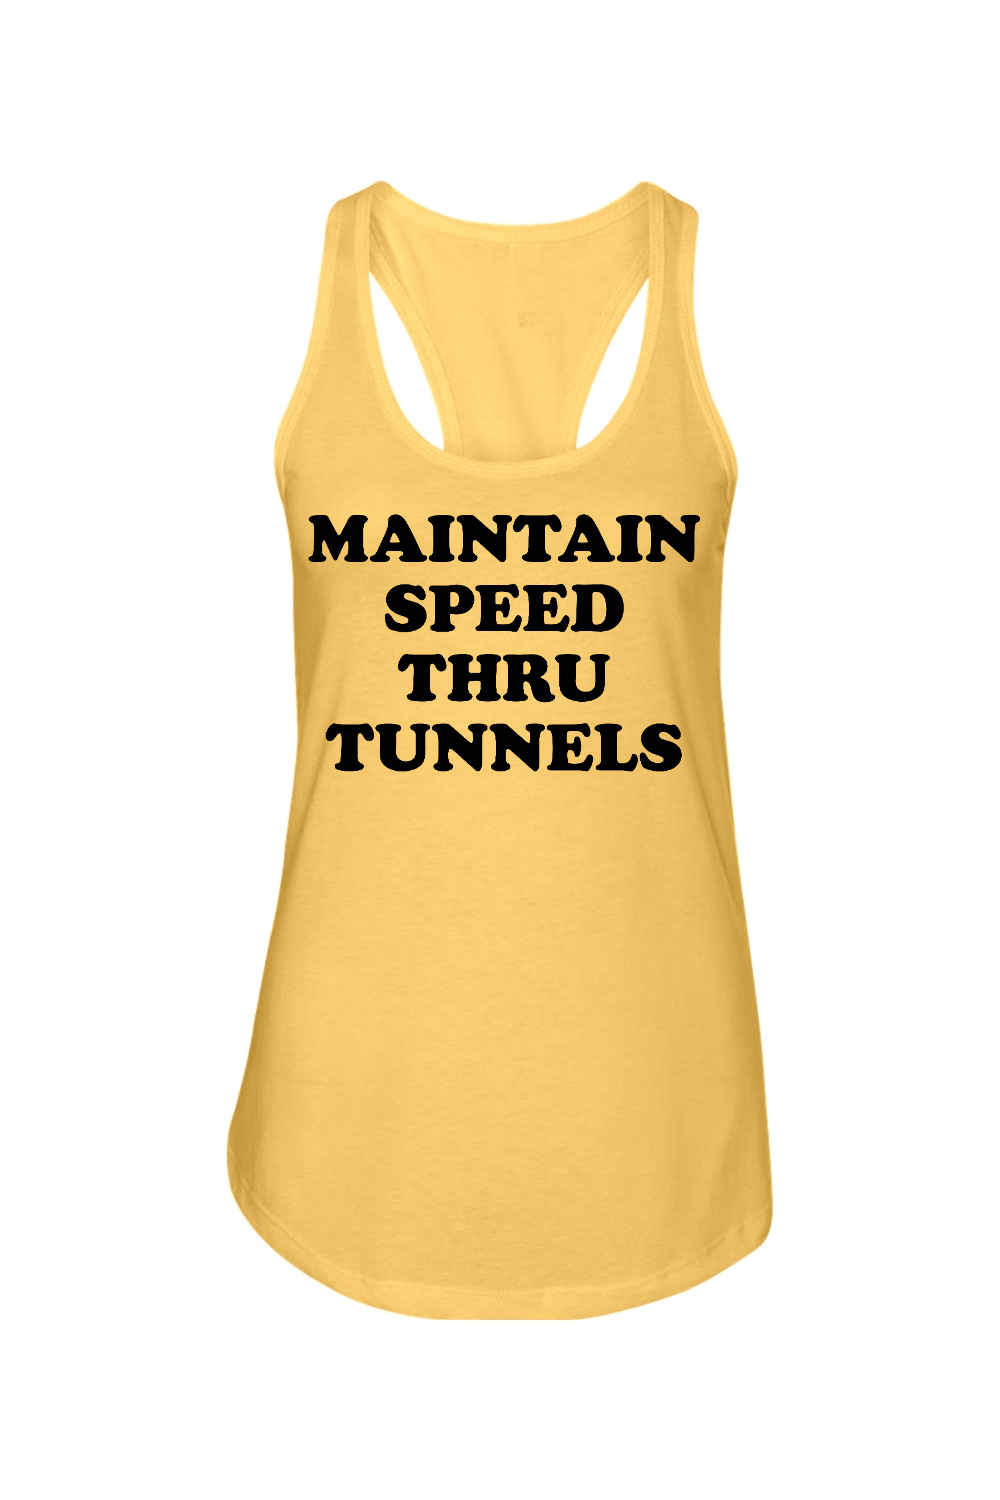 Maintain Speed Through Tunnels - Ladies Racerback Tank - Yinzylvania